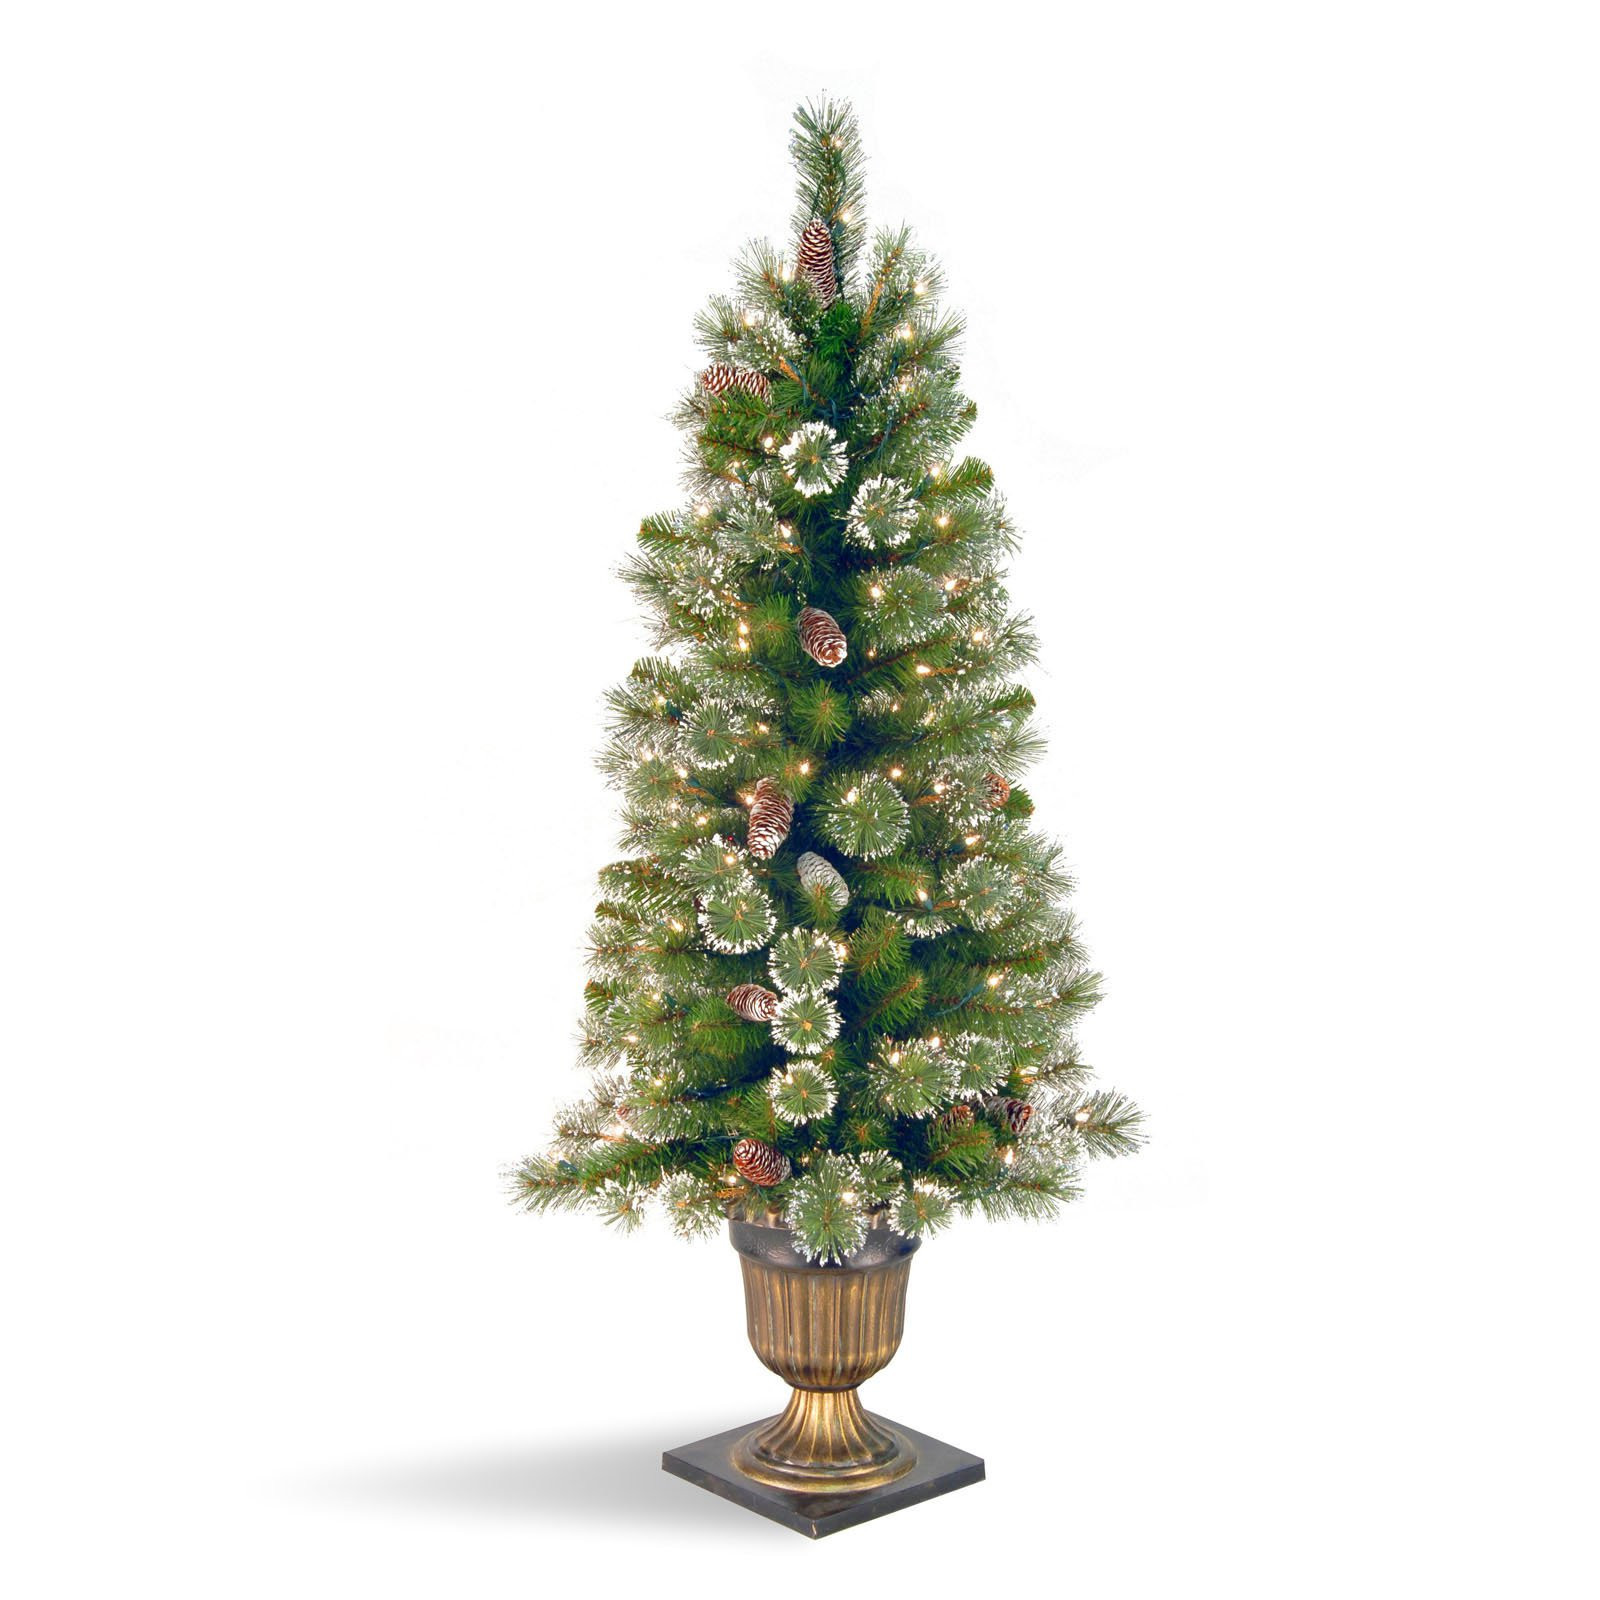 Prelit Entryway Christmas Trees
 Glittery Pine Entrance Slim Pre lit Christmas Tree at